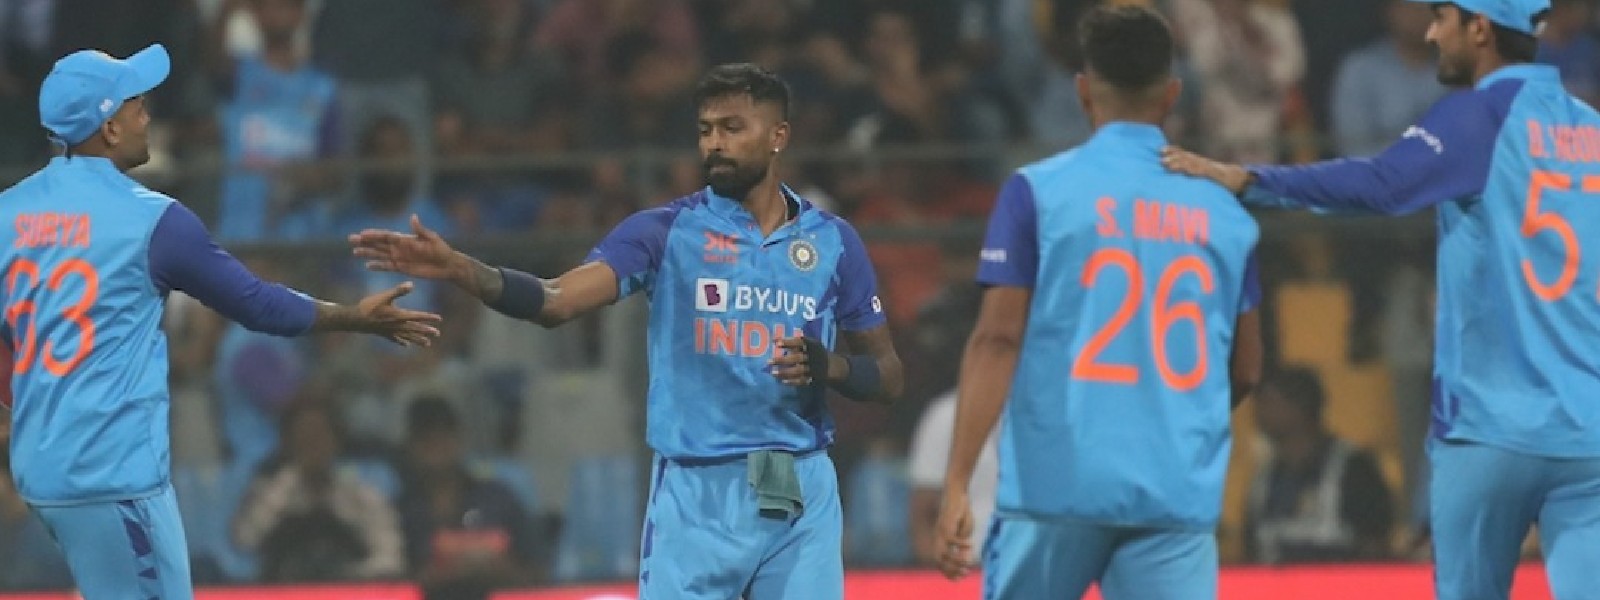 India beat Sri Lanka in a last-ball thriller